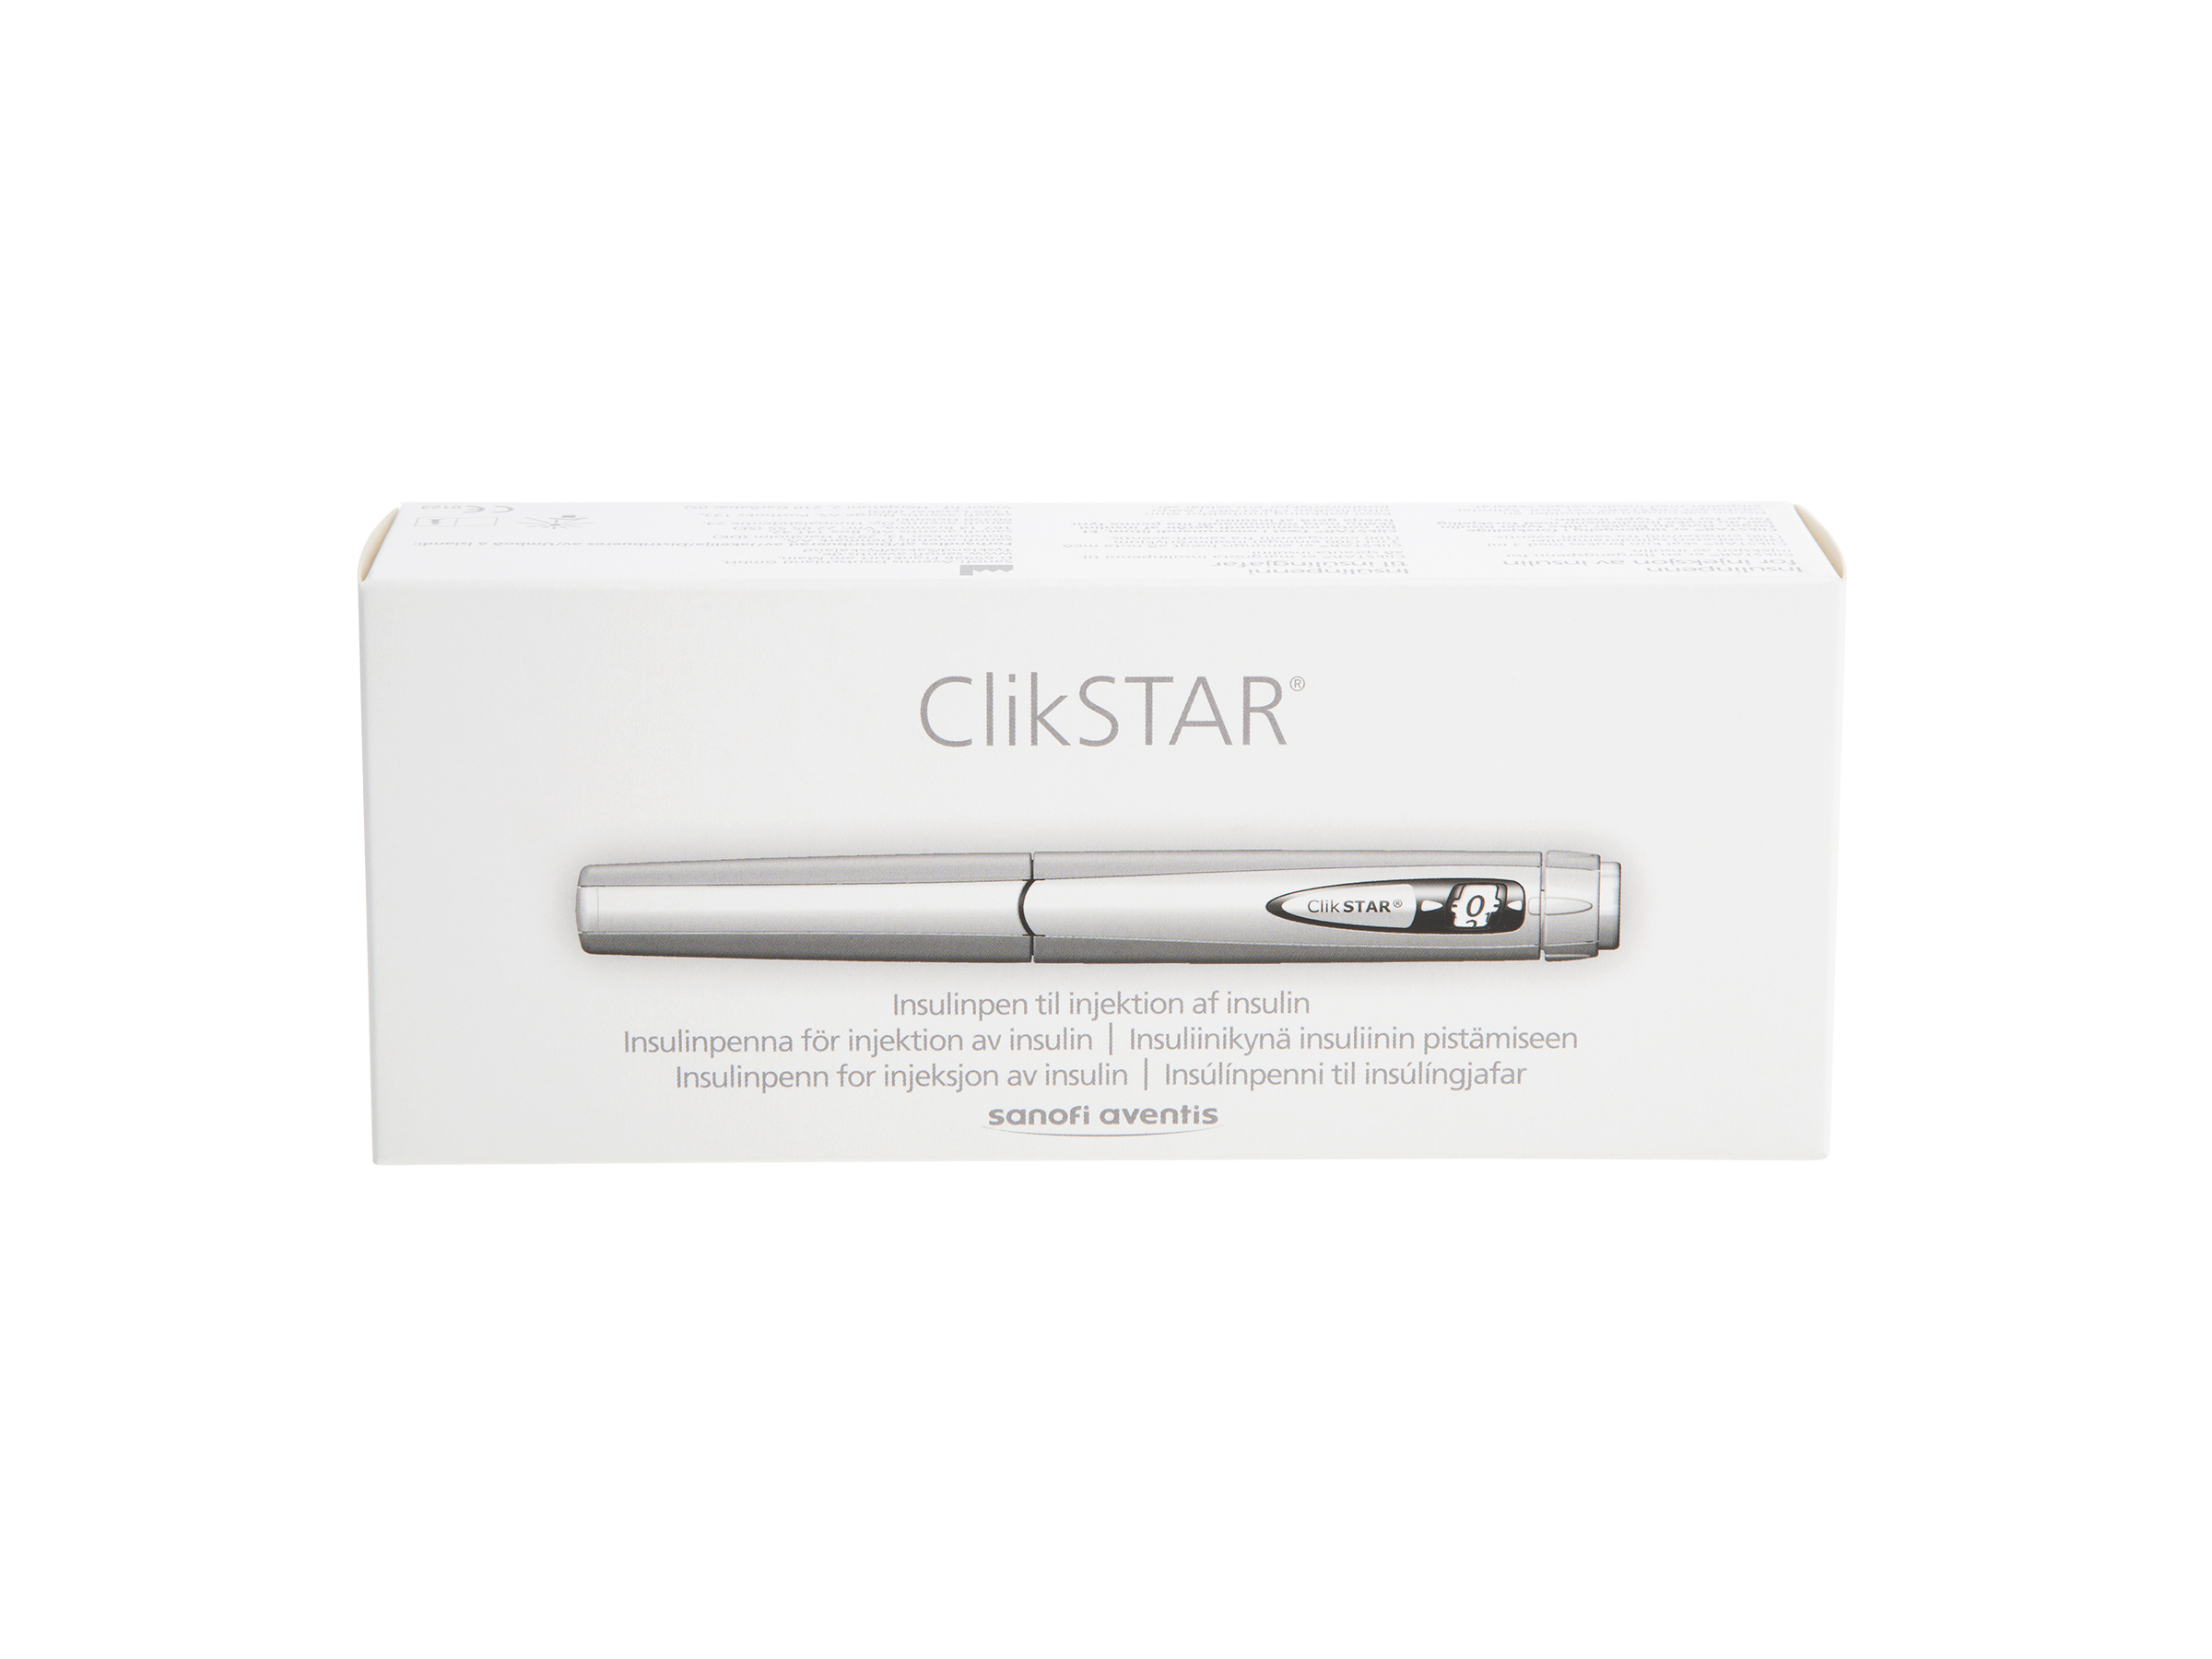 ClikStar insulinpen sølv lantus, 1 stk.